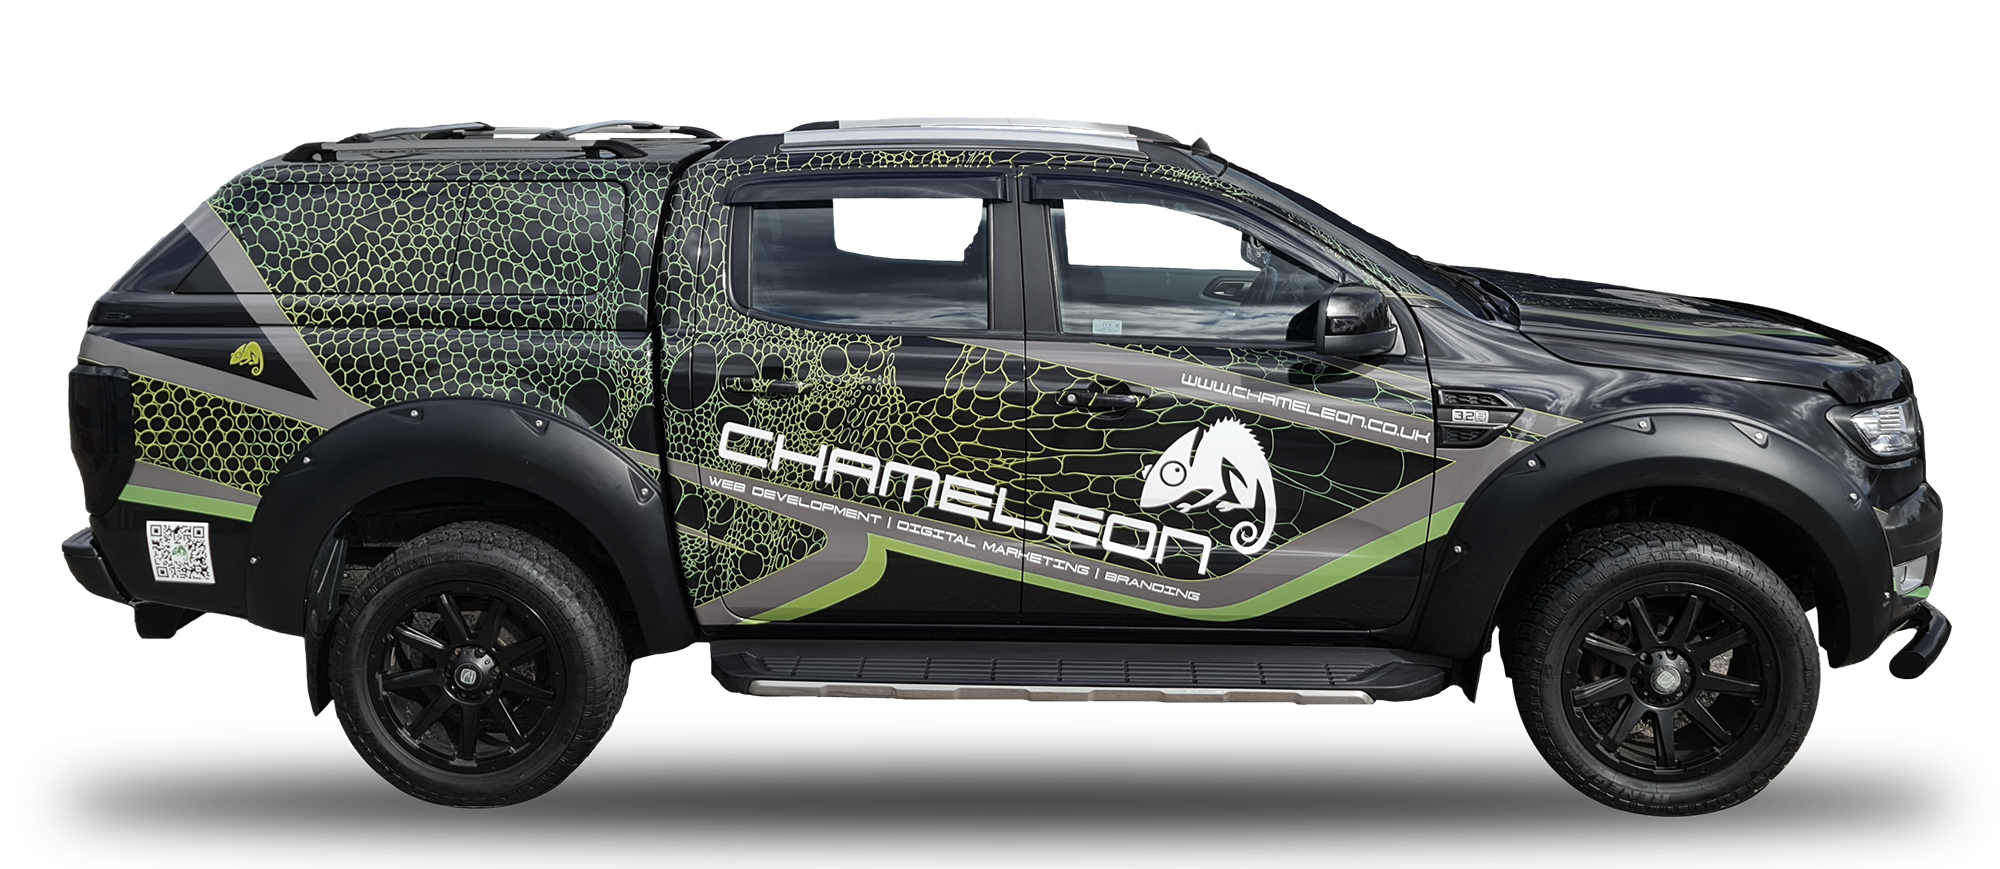 Chameleon Web Services Vehicle Wrap 3